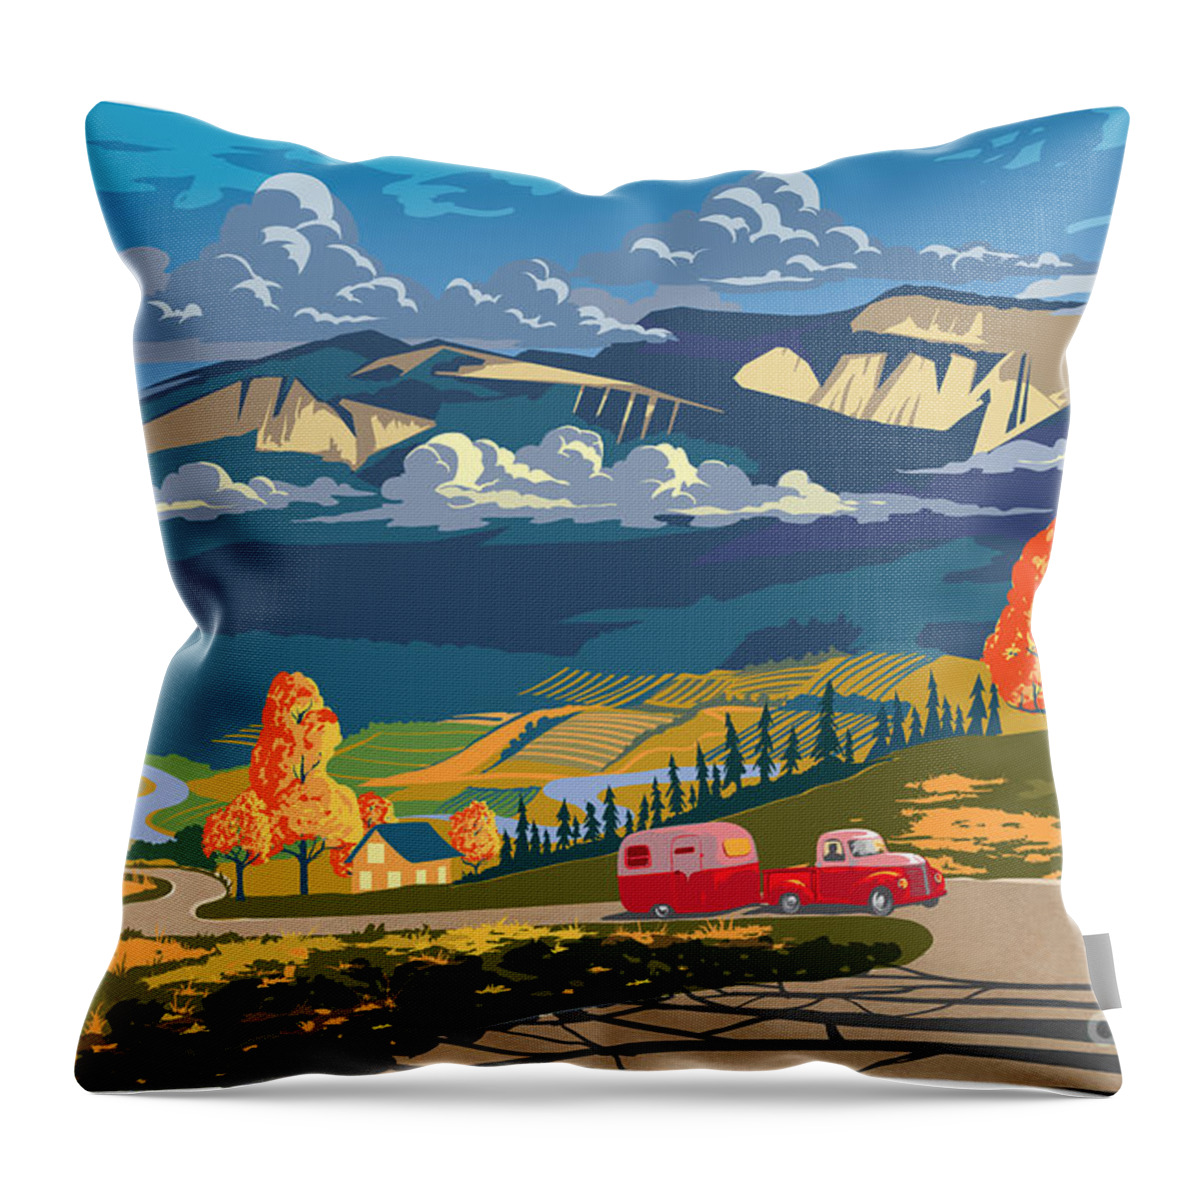 Retro Travel Throw Pillow featuring the painting Retro Travel Autumn Landscape by Sassan Filsoof